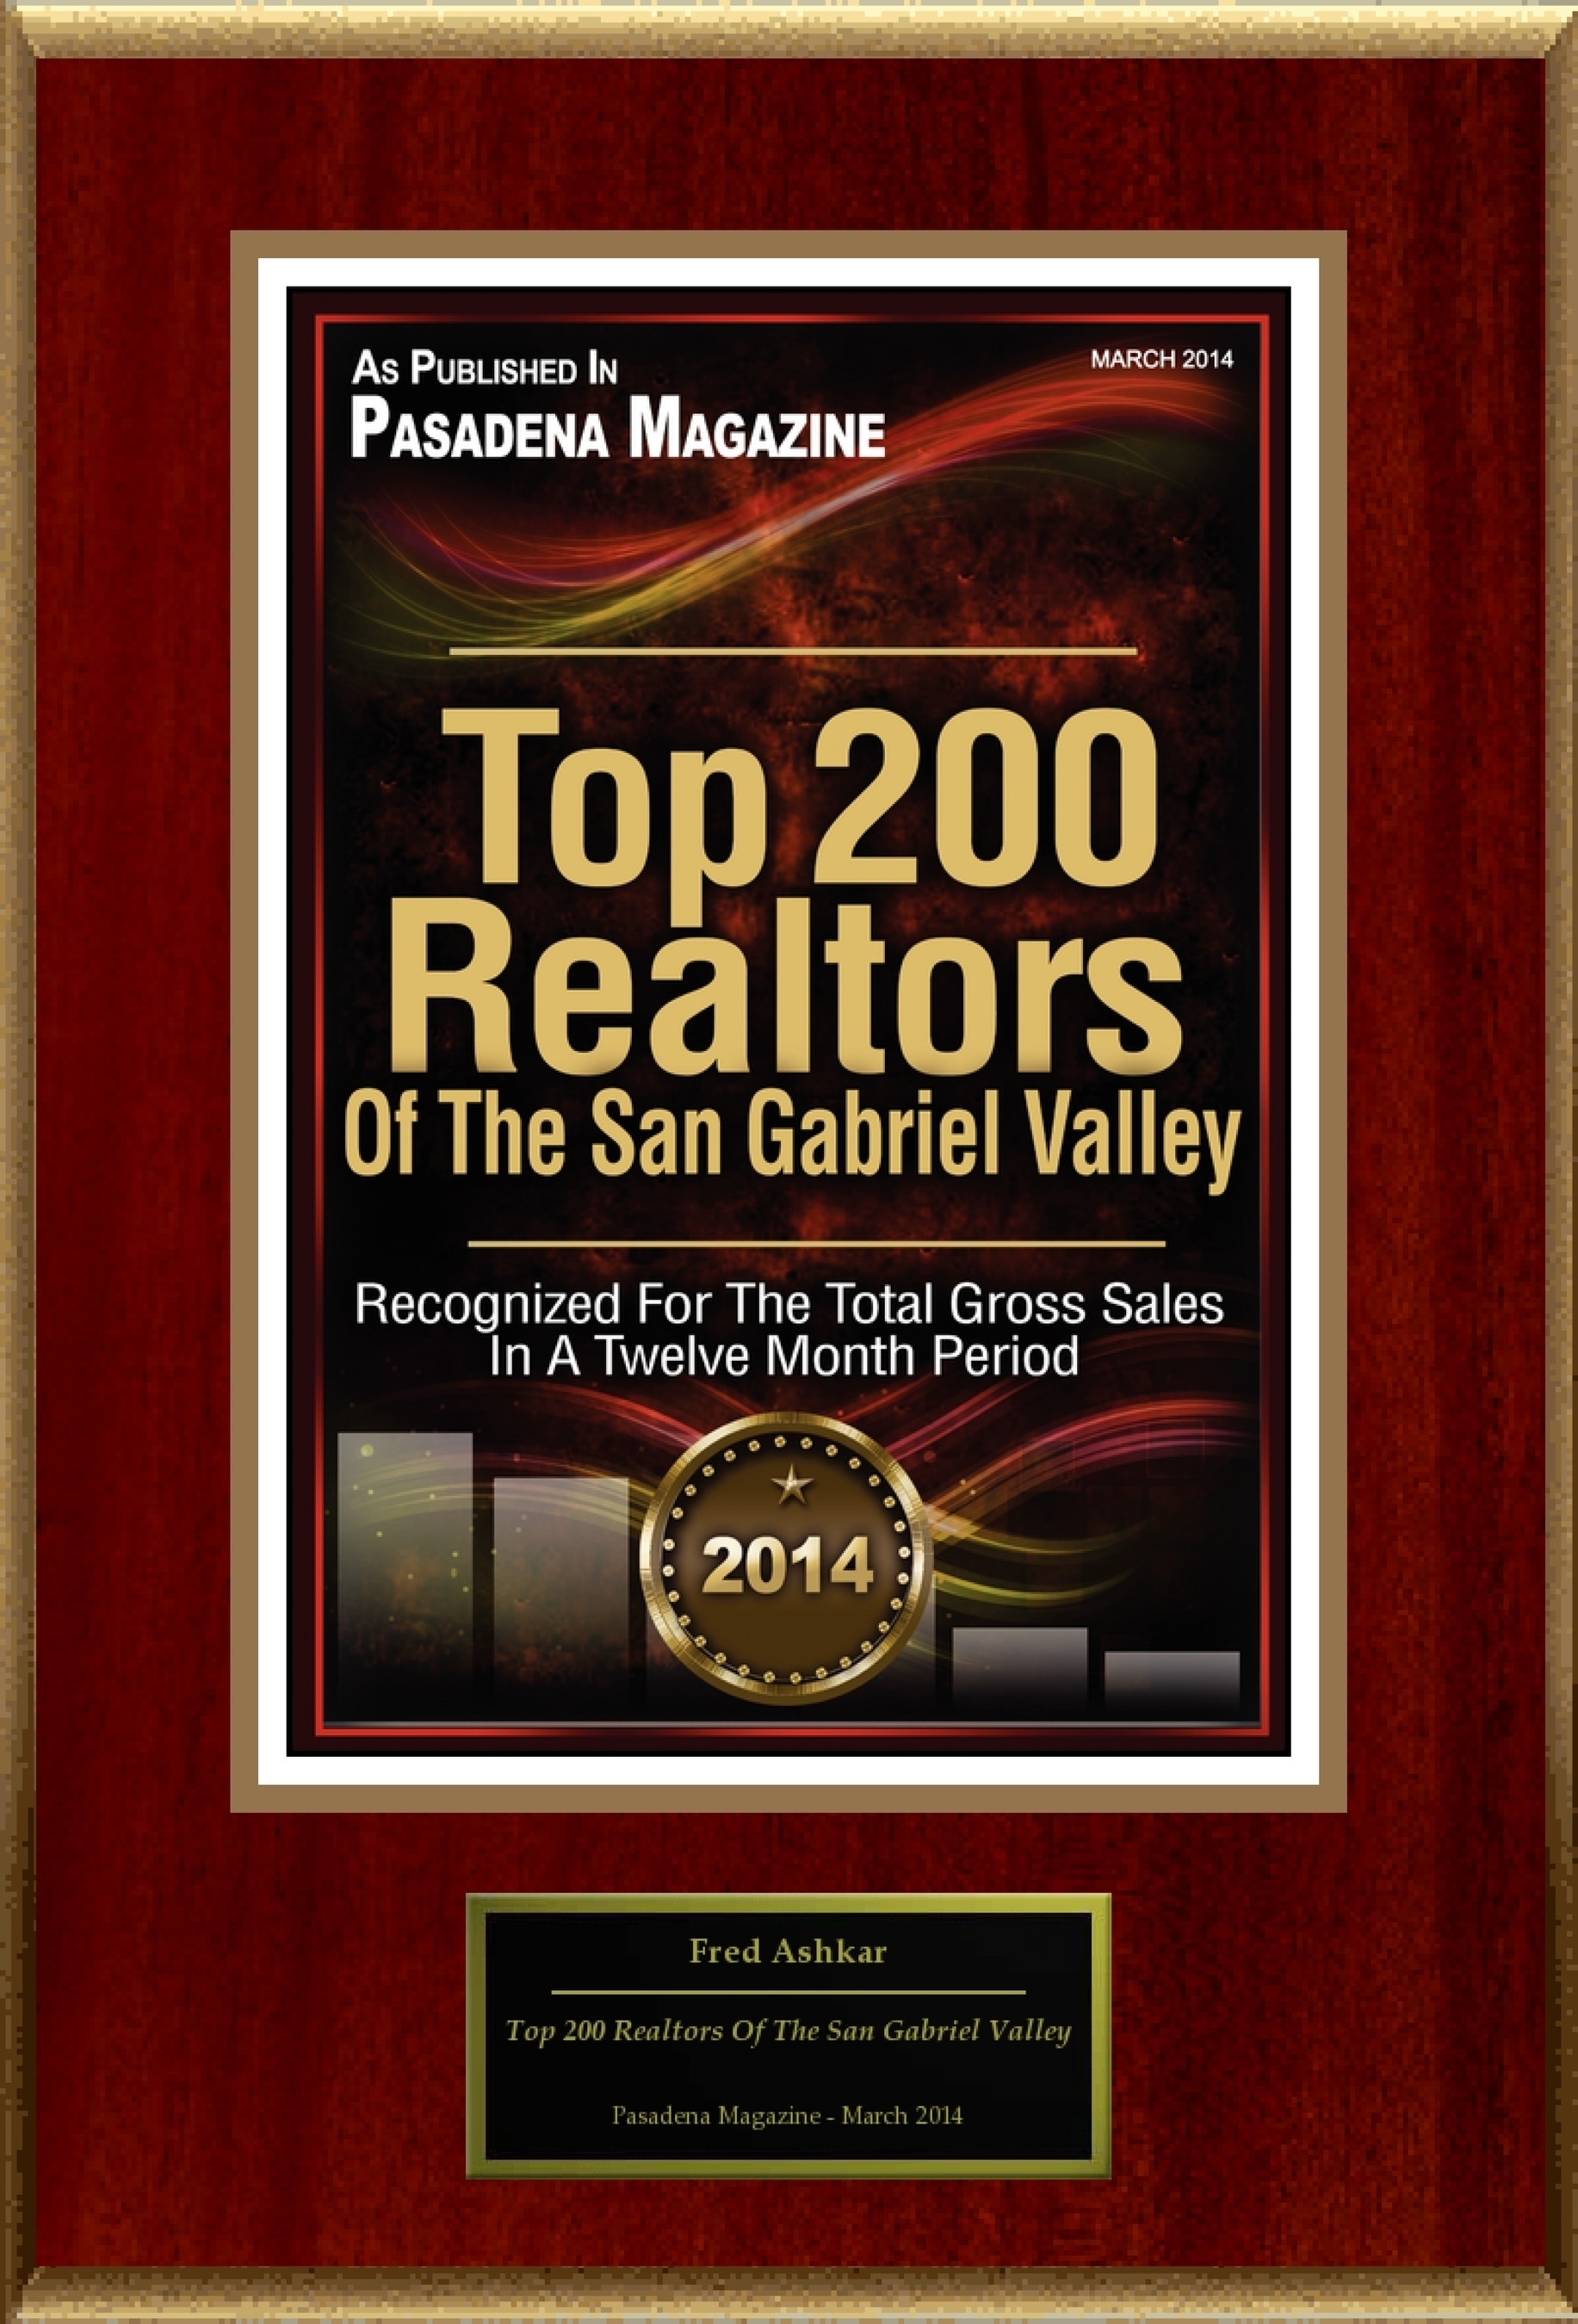 Fred Ashkar Selected For "Top 200 Realtors Of The San Gabriel Valley". (PRNewsFoto/American Registry)